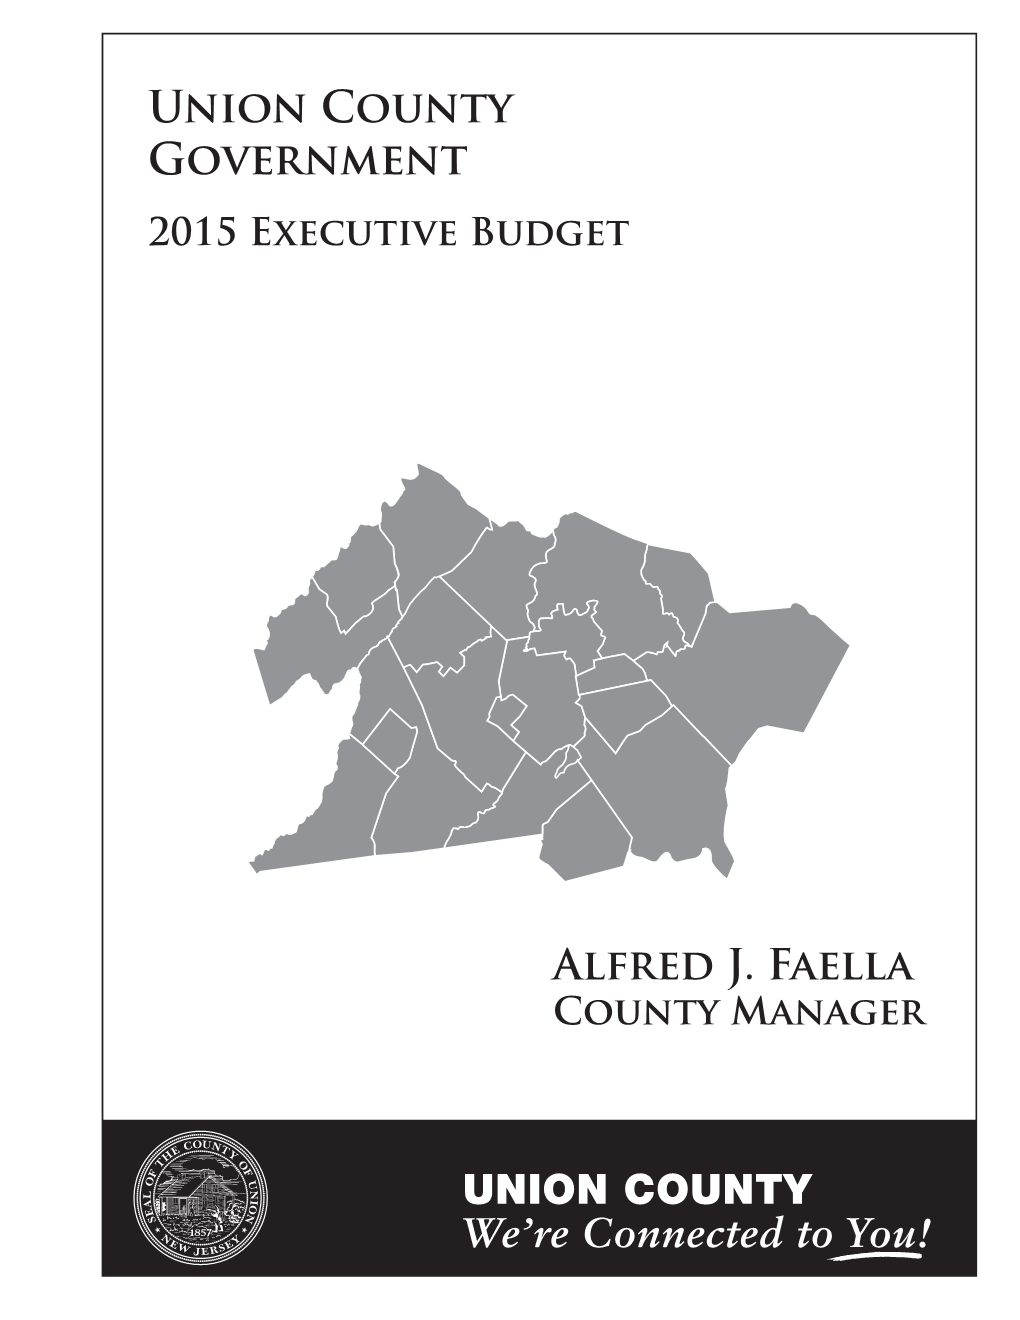 Union County Government 2015 Executive Budget